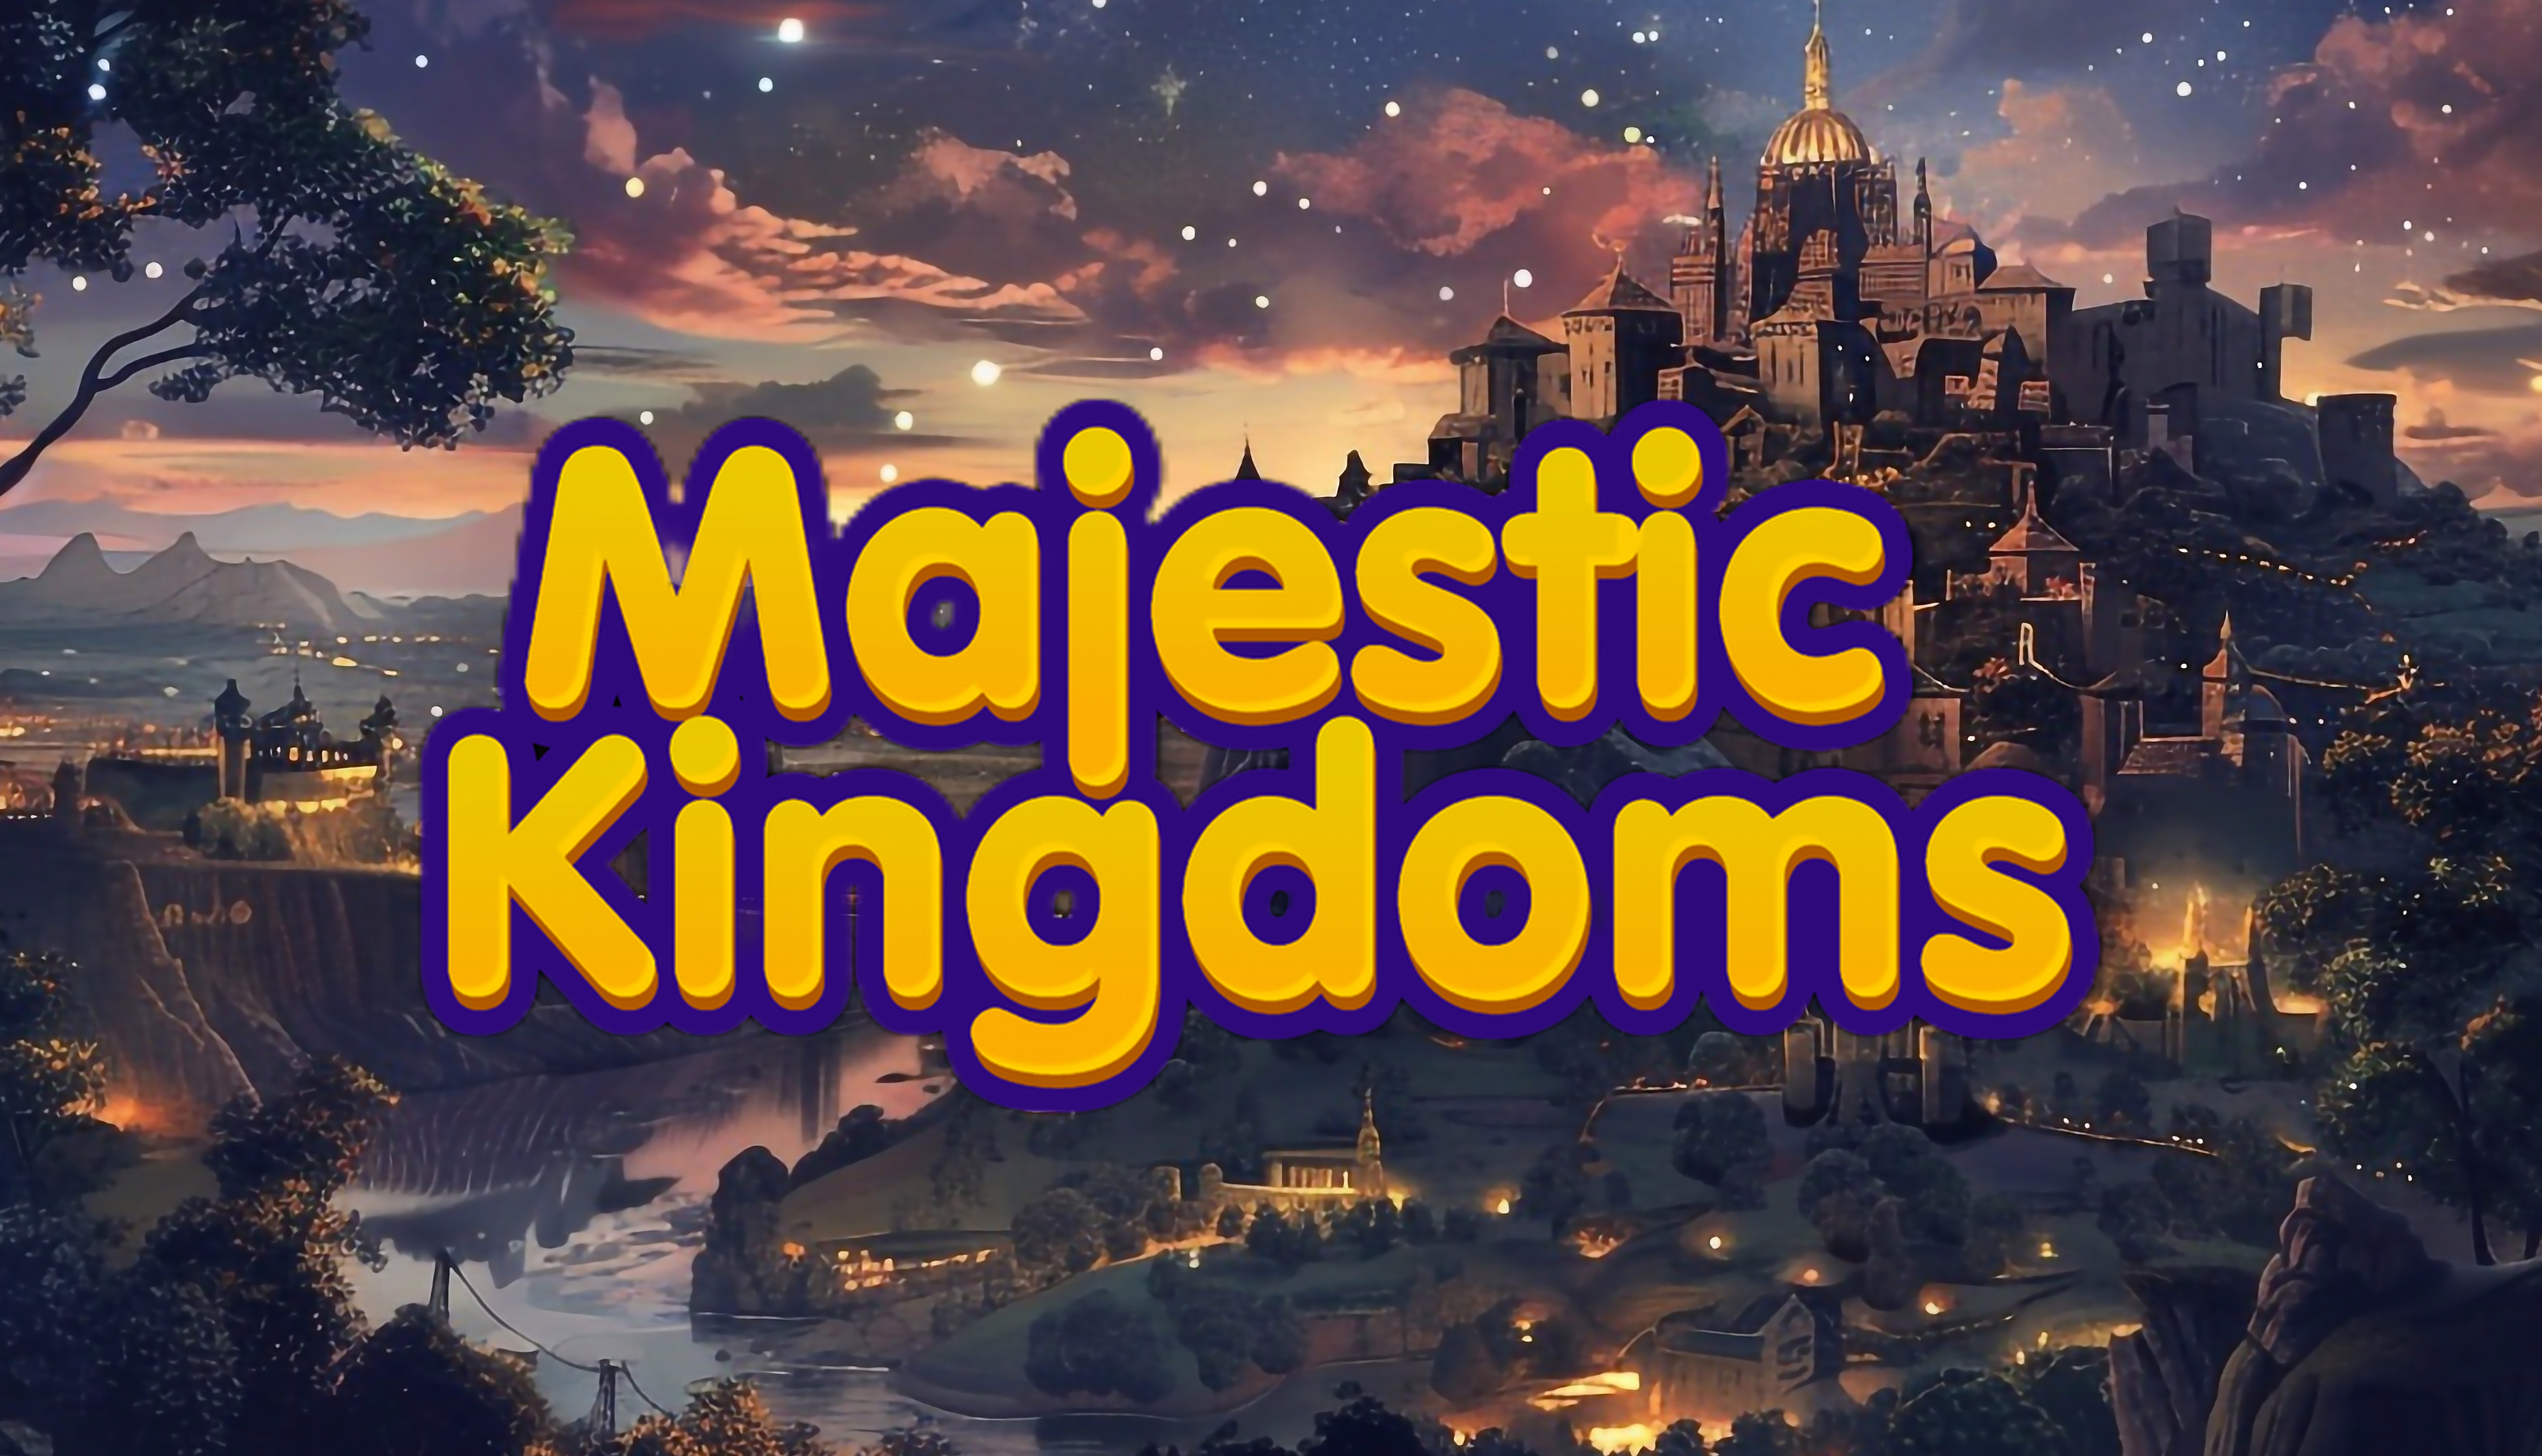 Majestic Kingdoms- Pixel Art - Asset Pack